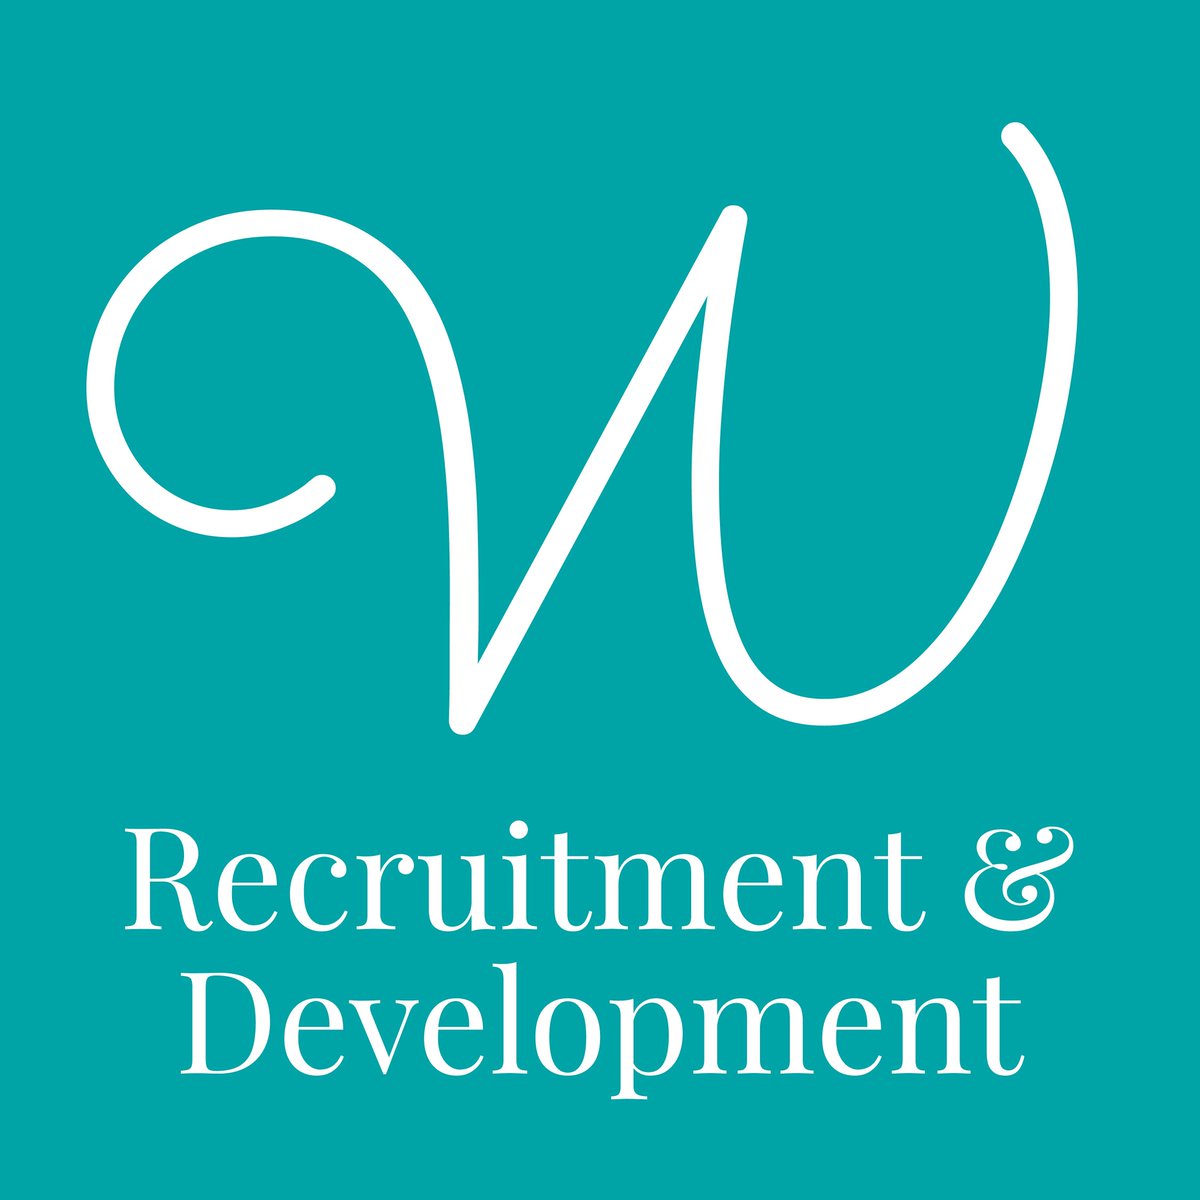 New Job: Commissioning Editor - Entertainment (Illustrated Non-fiction) - Wonderful  Recruitment & Development
London, UK 

More here: buff.ly/3U2Qu0c #PublishingJobs #JobsInBooks